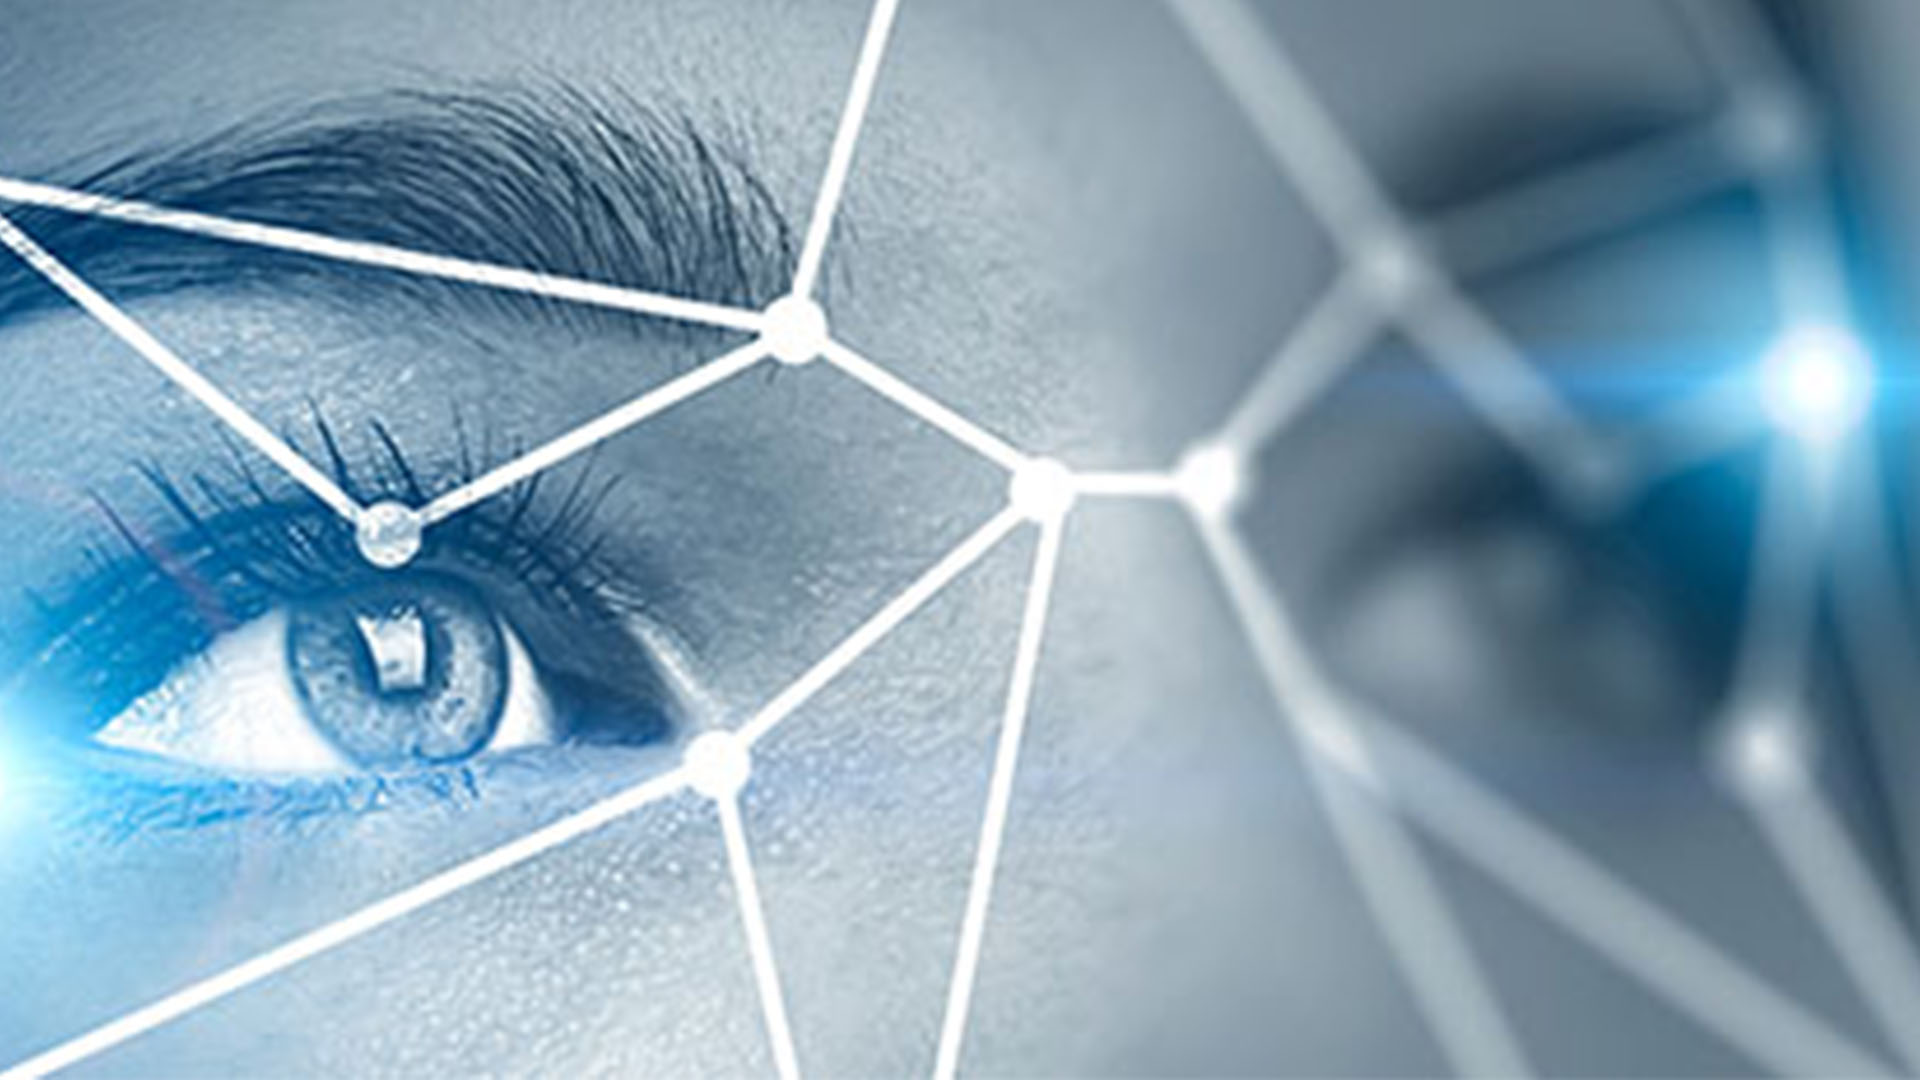 Facial recognition and biometrics